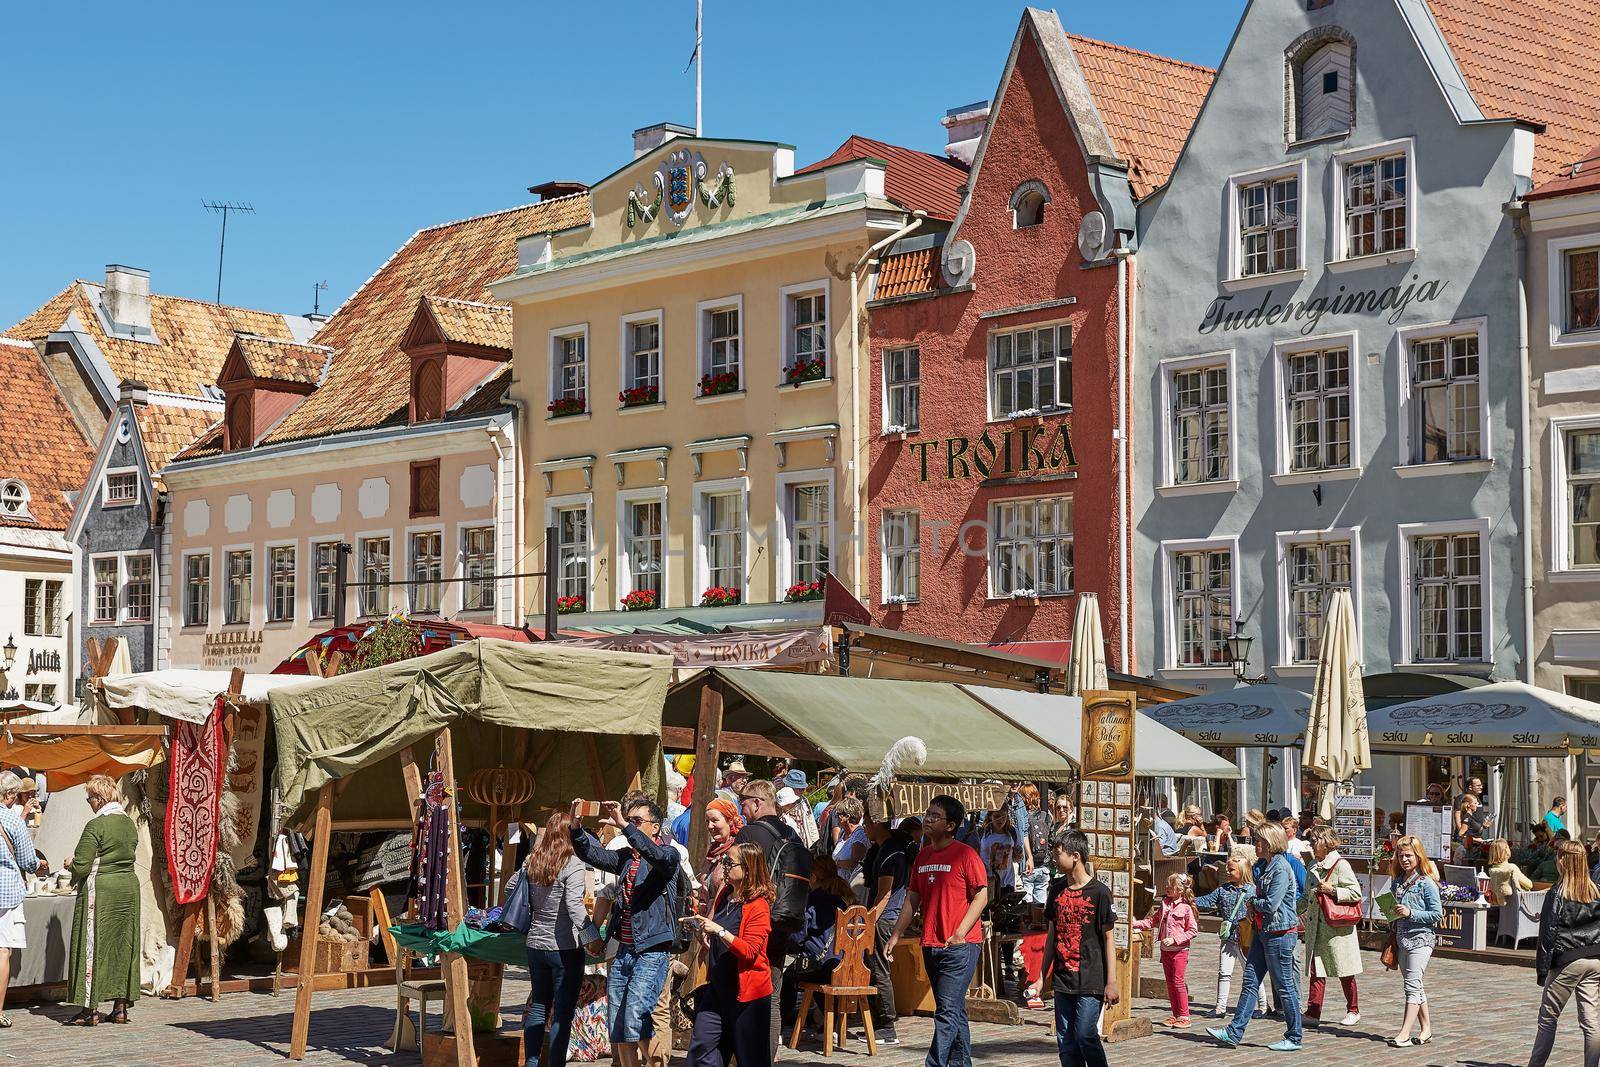 TALLINN, ESTONIA - JULY 07, 2017: Tourists crowd enjoying shopping at the medieval Town Square in the walled city of Tallinn Estonia